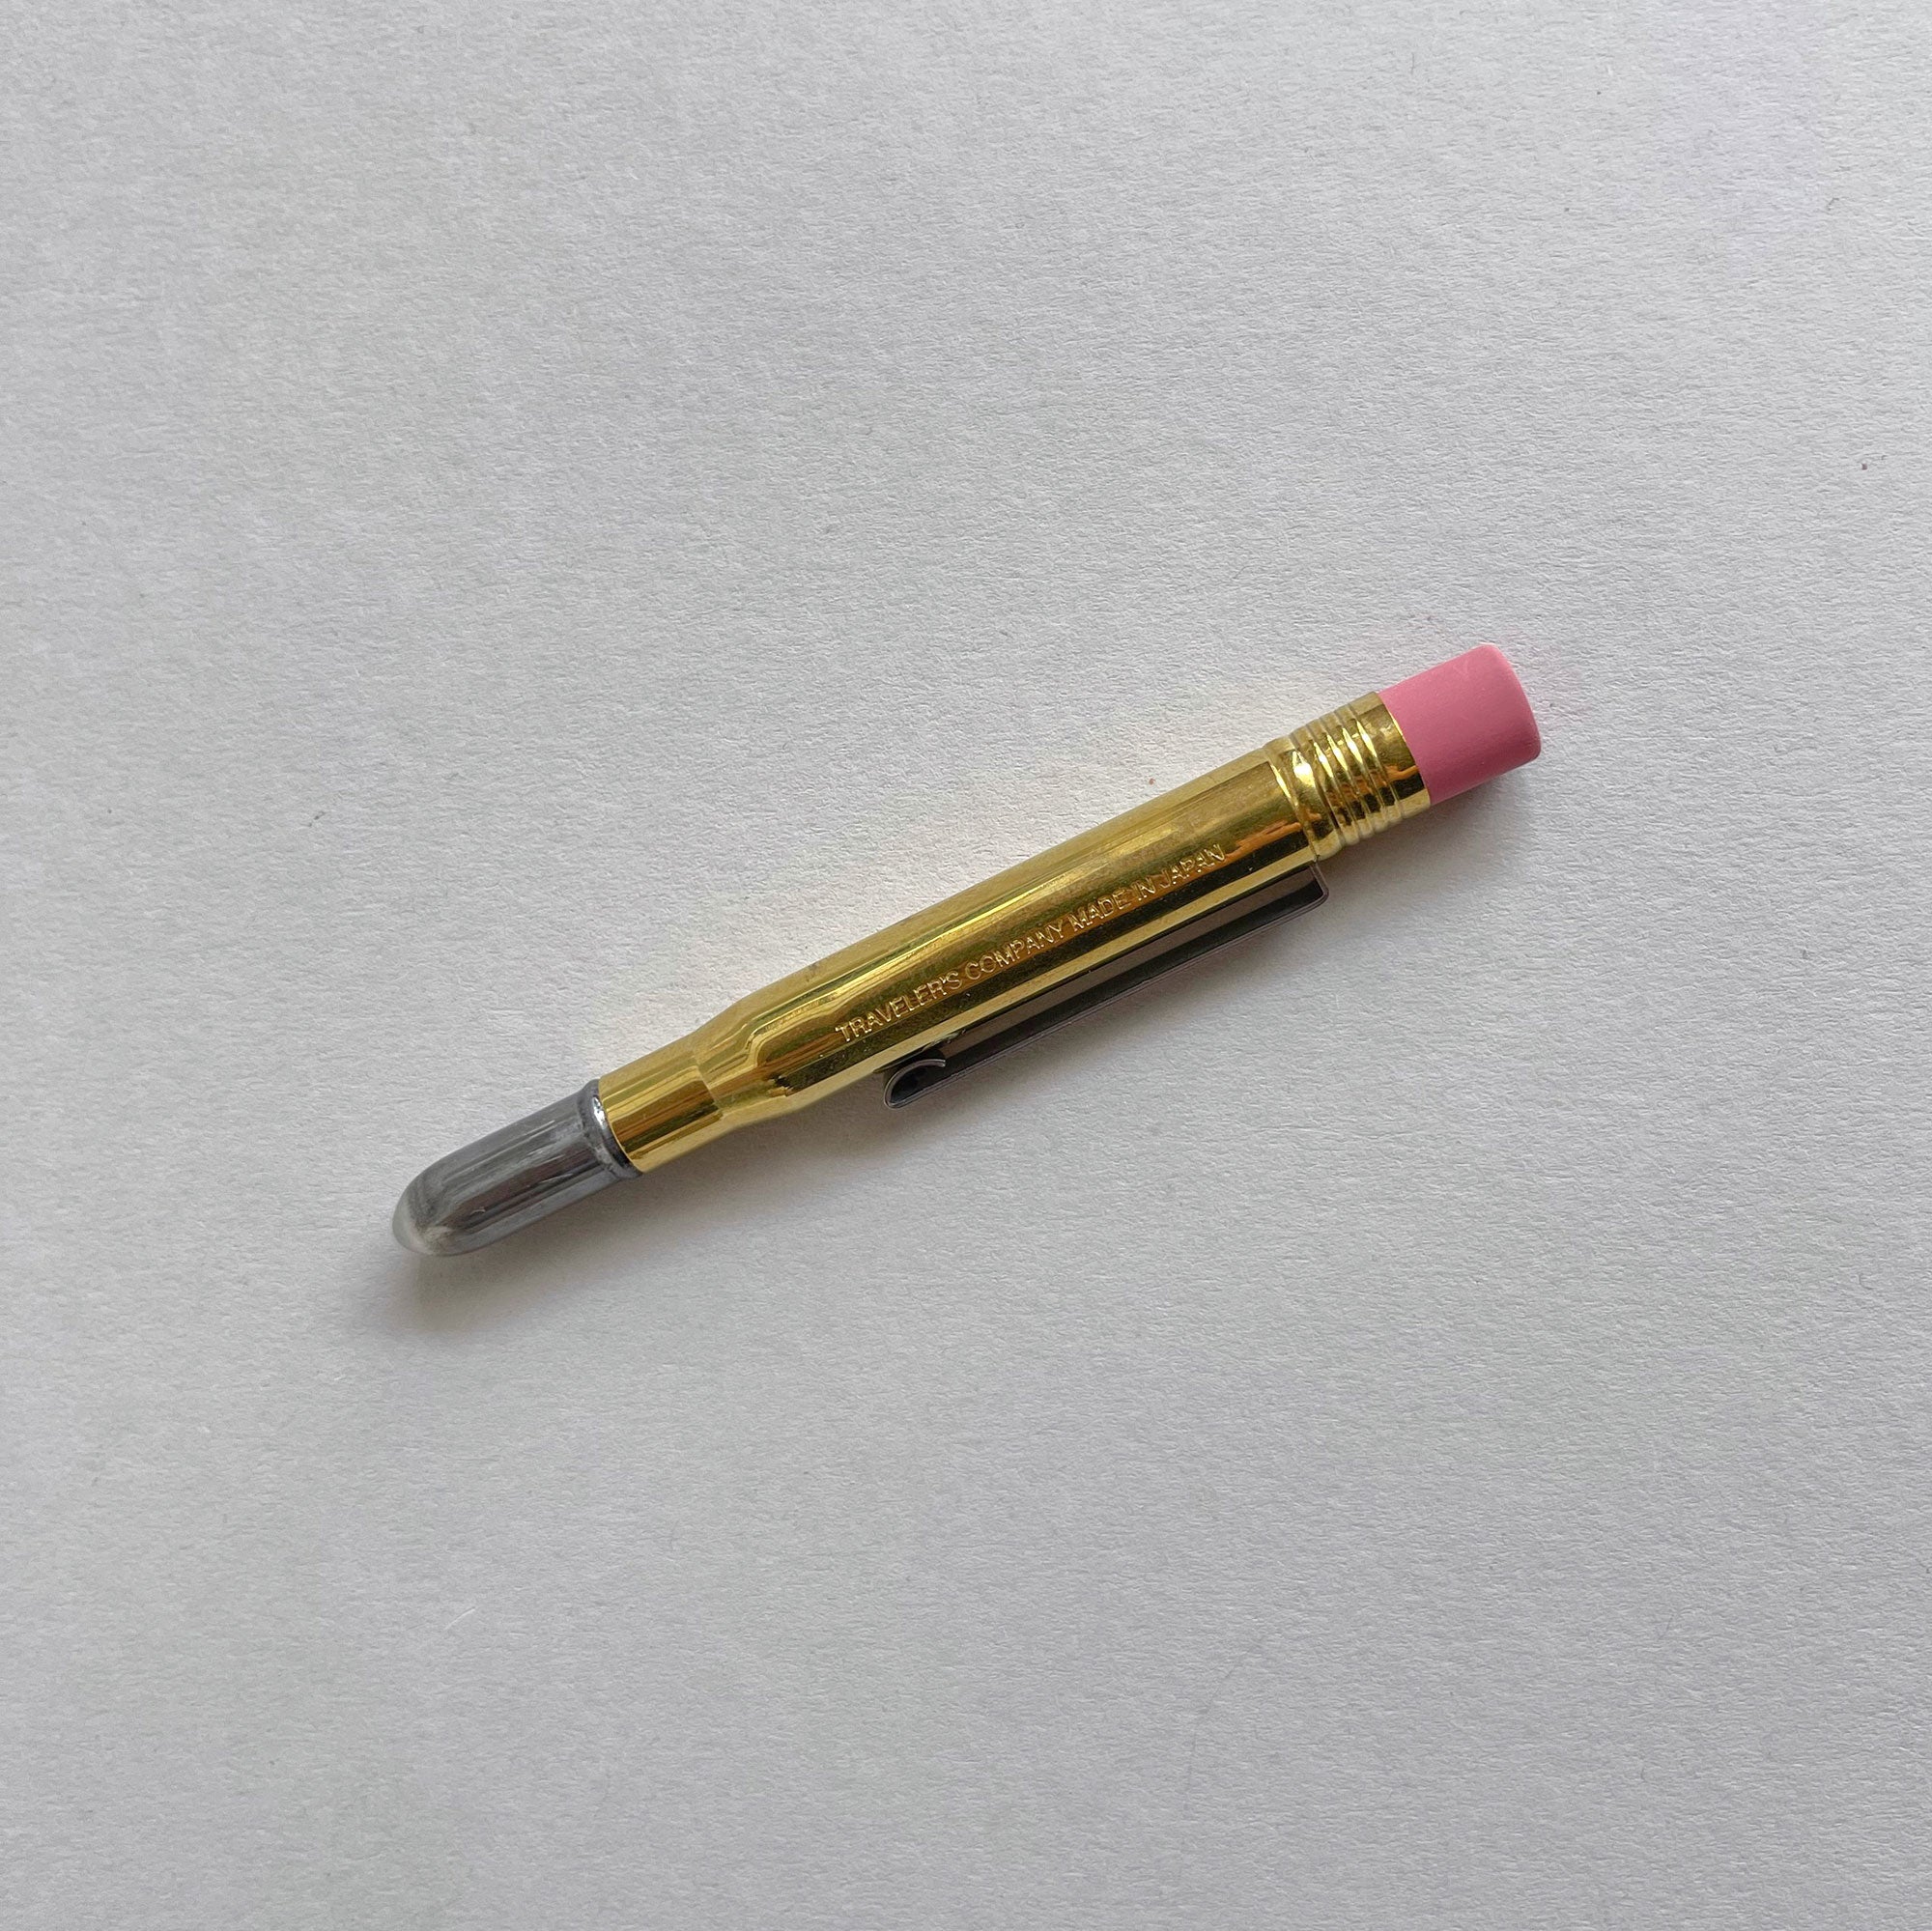 Brass Pencil Sharpener - Shop on Pinterest